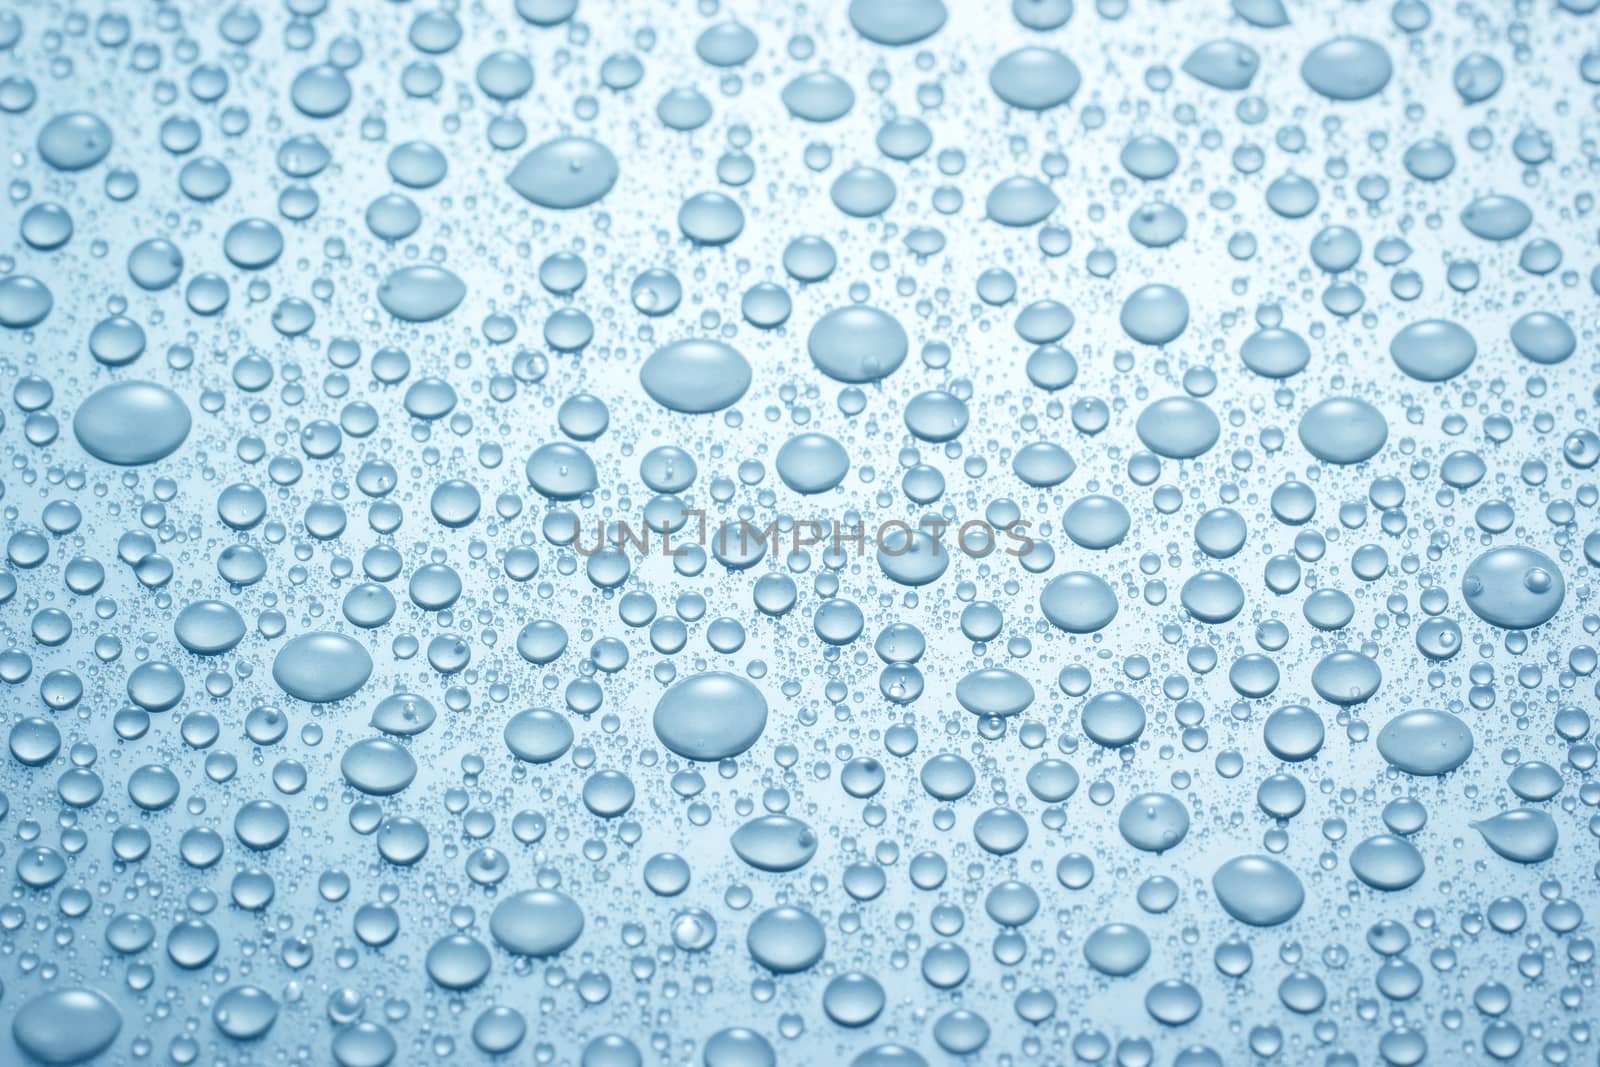 Water drops by Valengilda